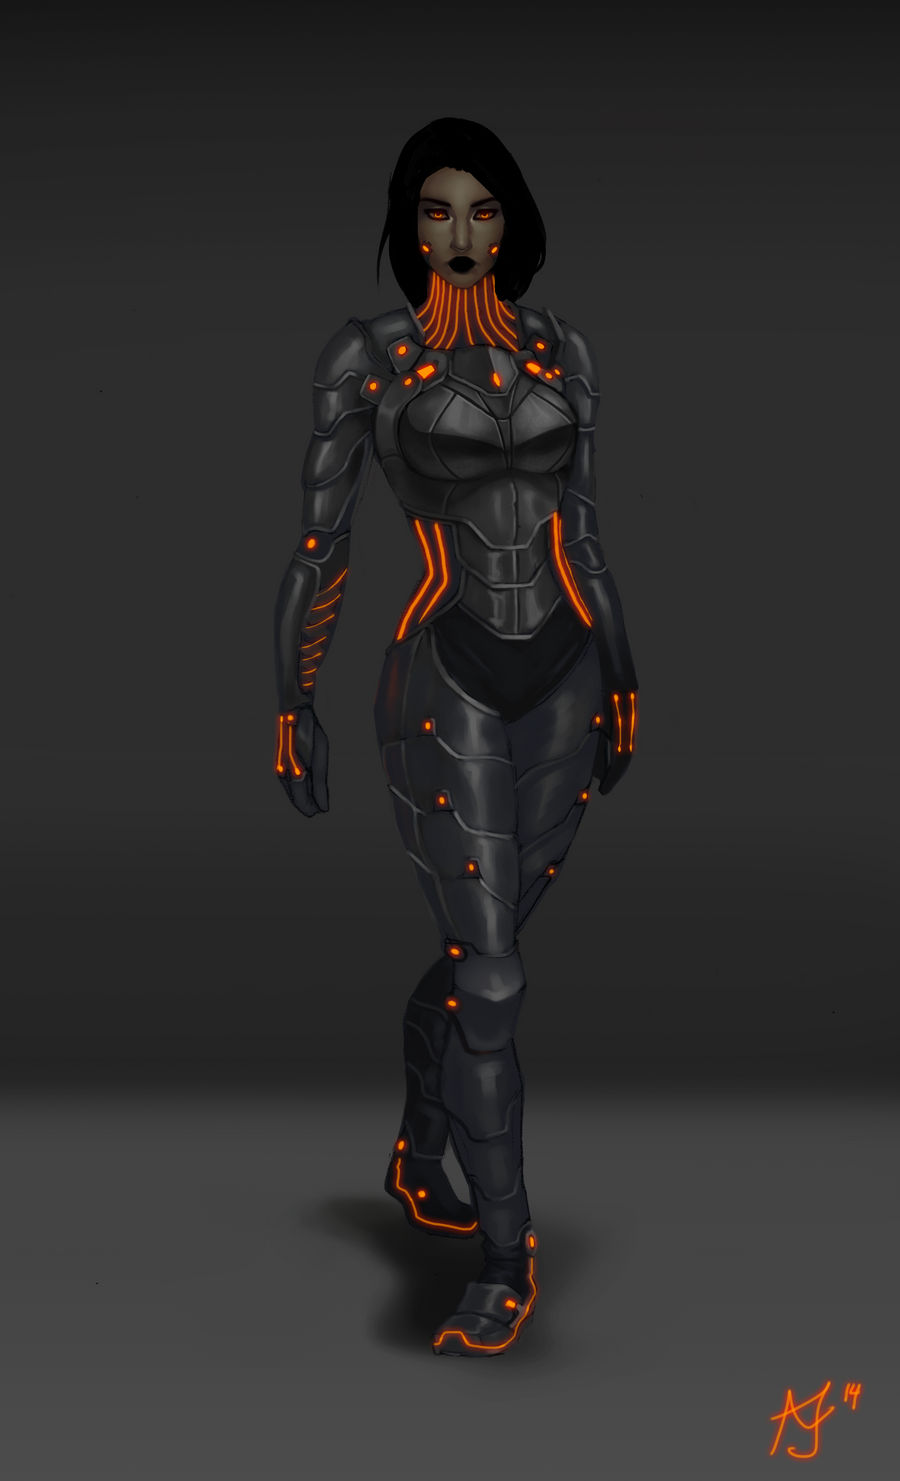 SciFi Female Armor by Xelandra on DeviantArt